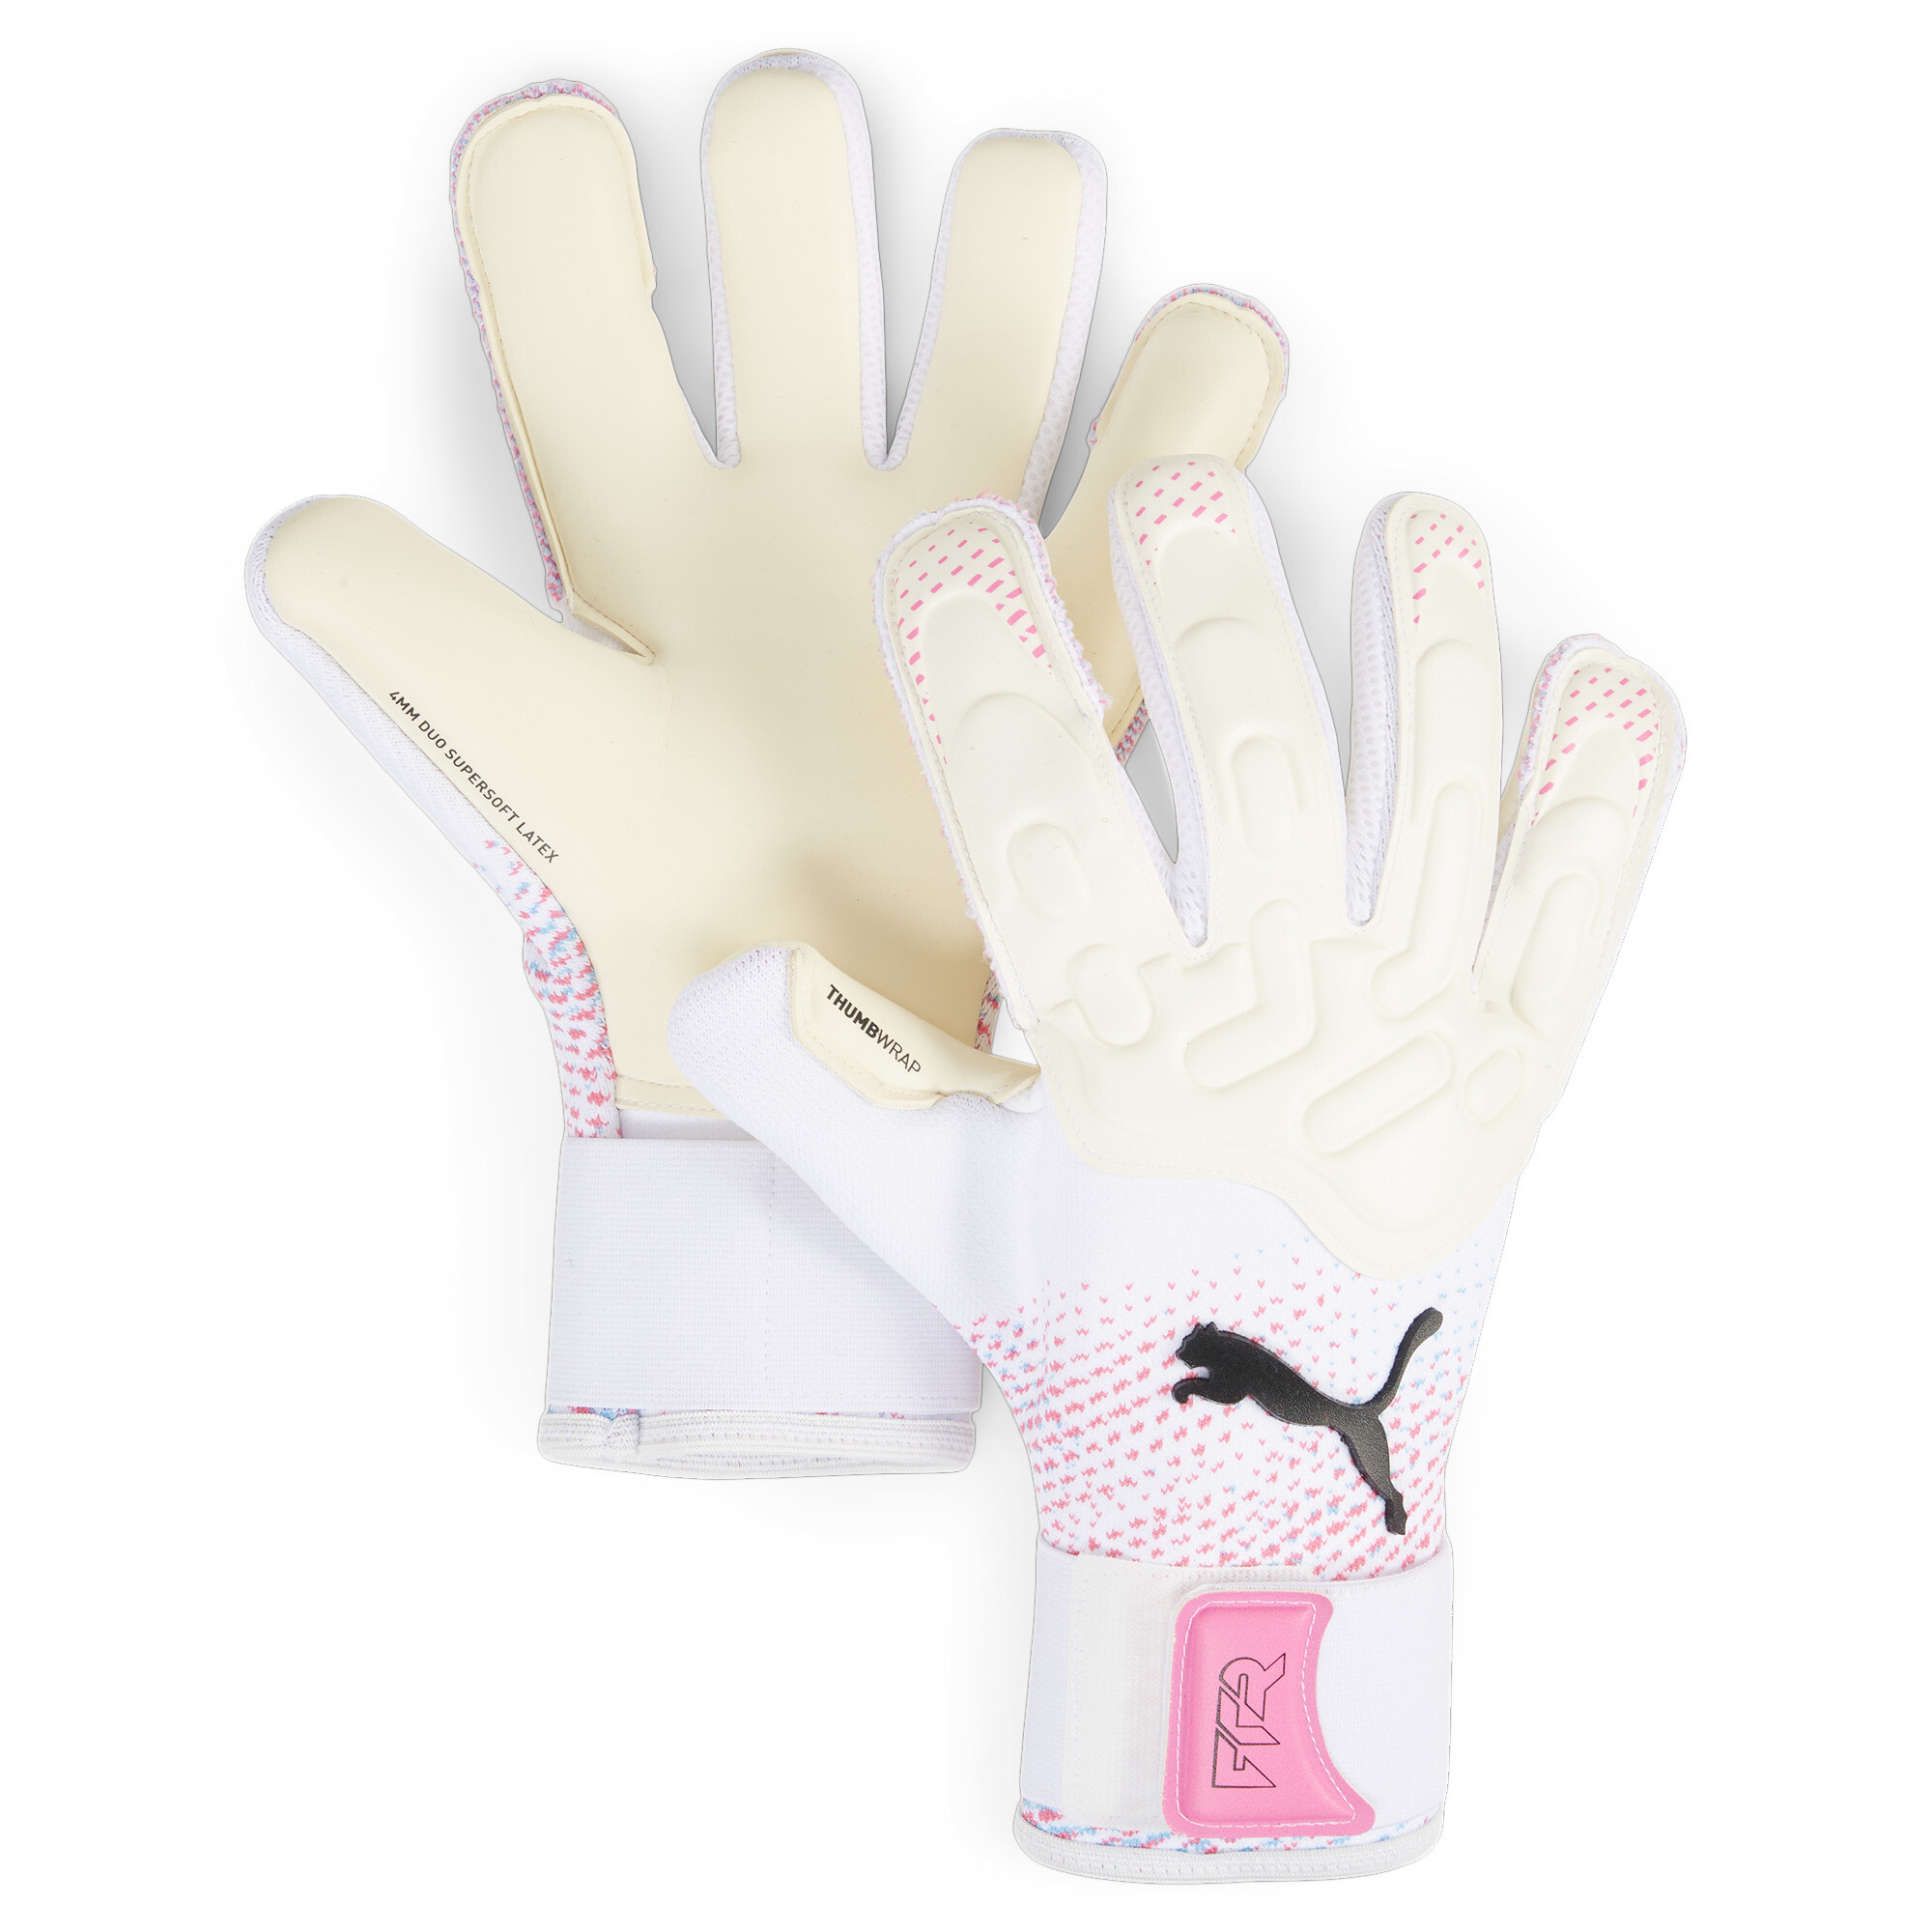 Puma FUTURE Pro Hybrid Goalkeeper Gloves, White, Size 7.5, Accessories